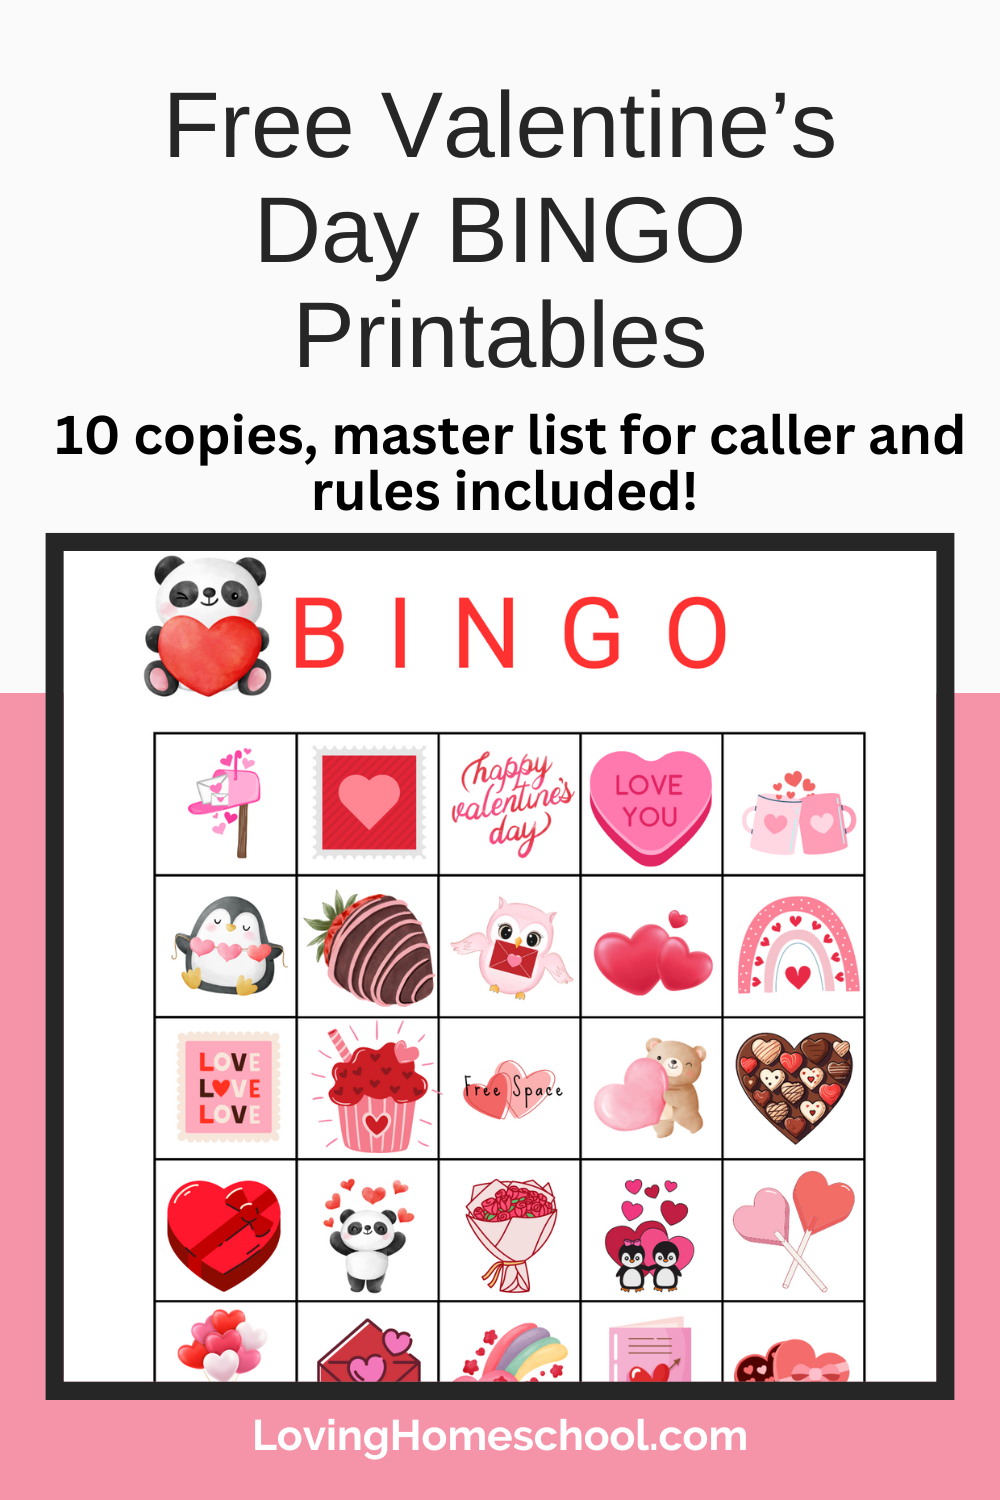 Free Valentine’s Day BINGO Printables Pinterest Pin